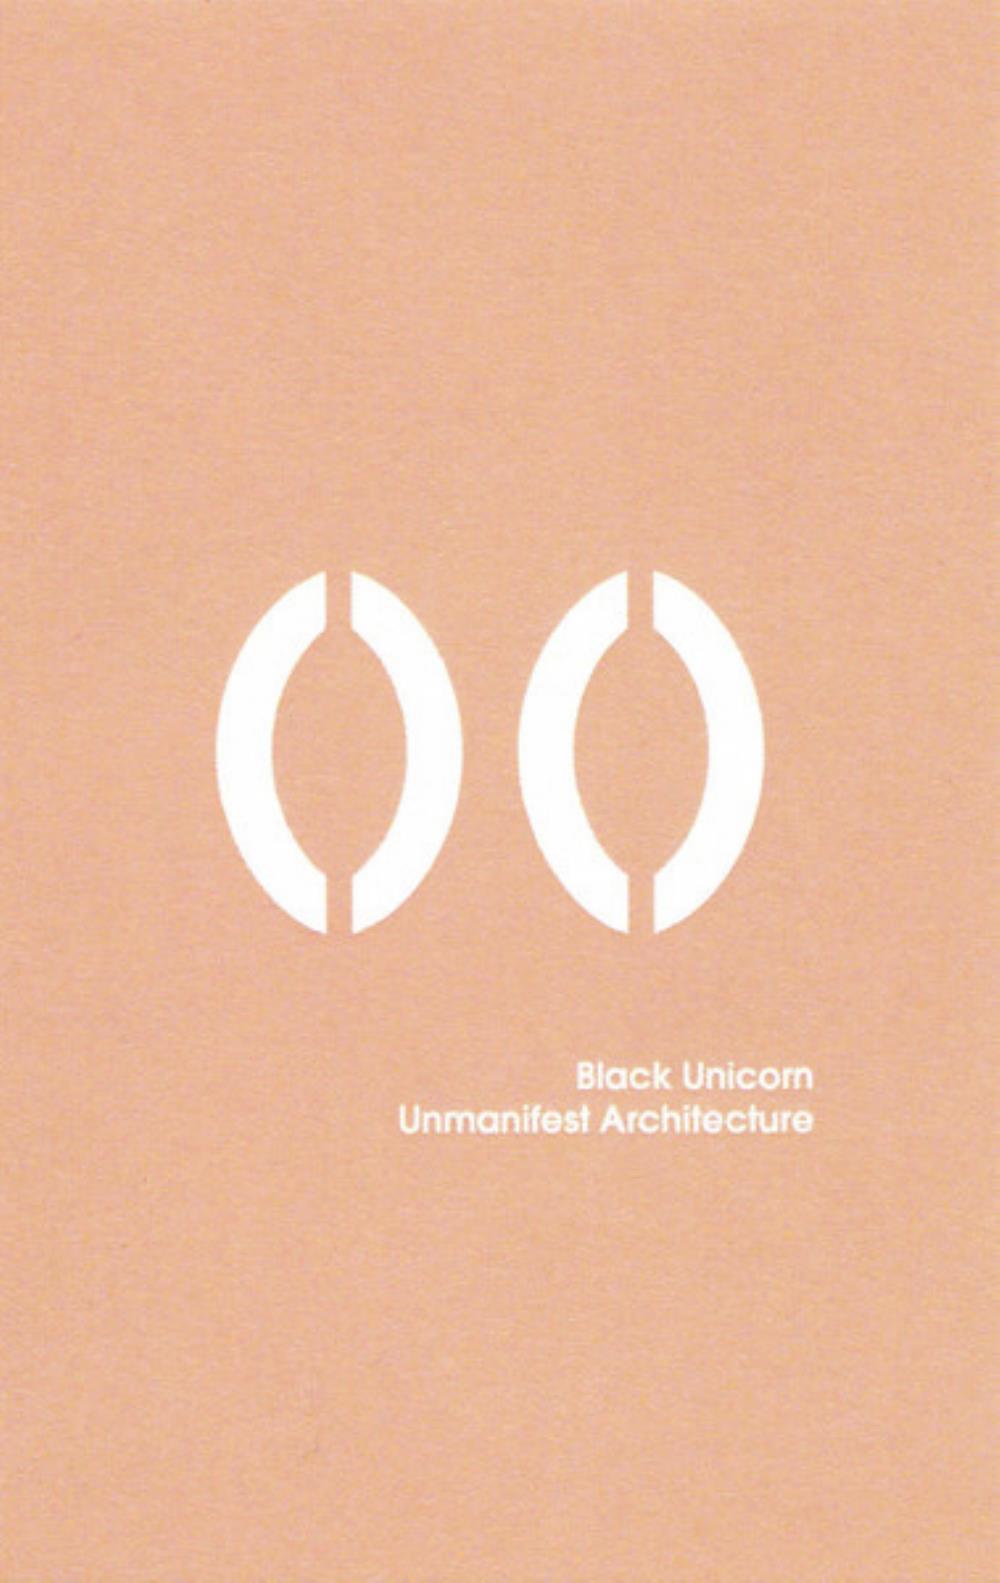 Black Unicorn Unmanifest Architecture album cover